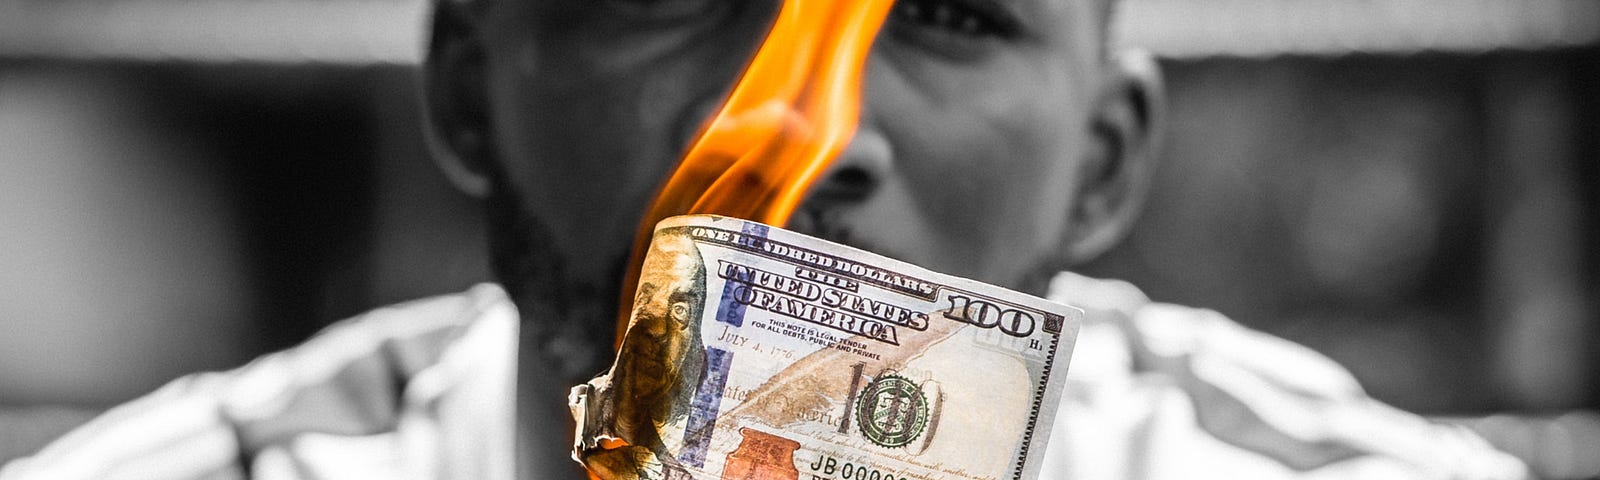 Man holding burning cash money